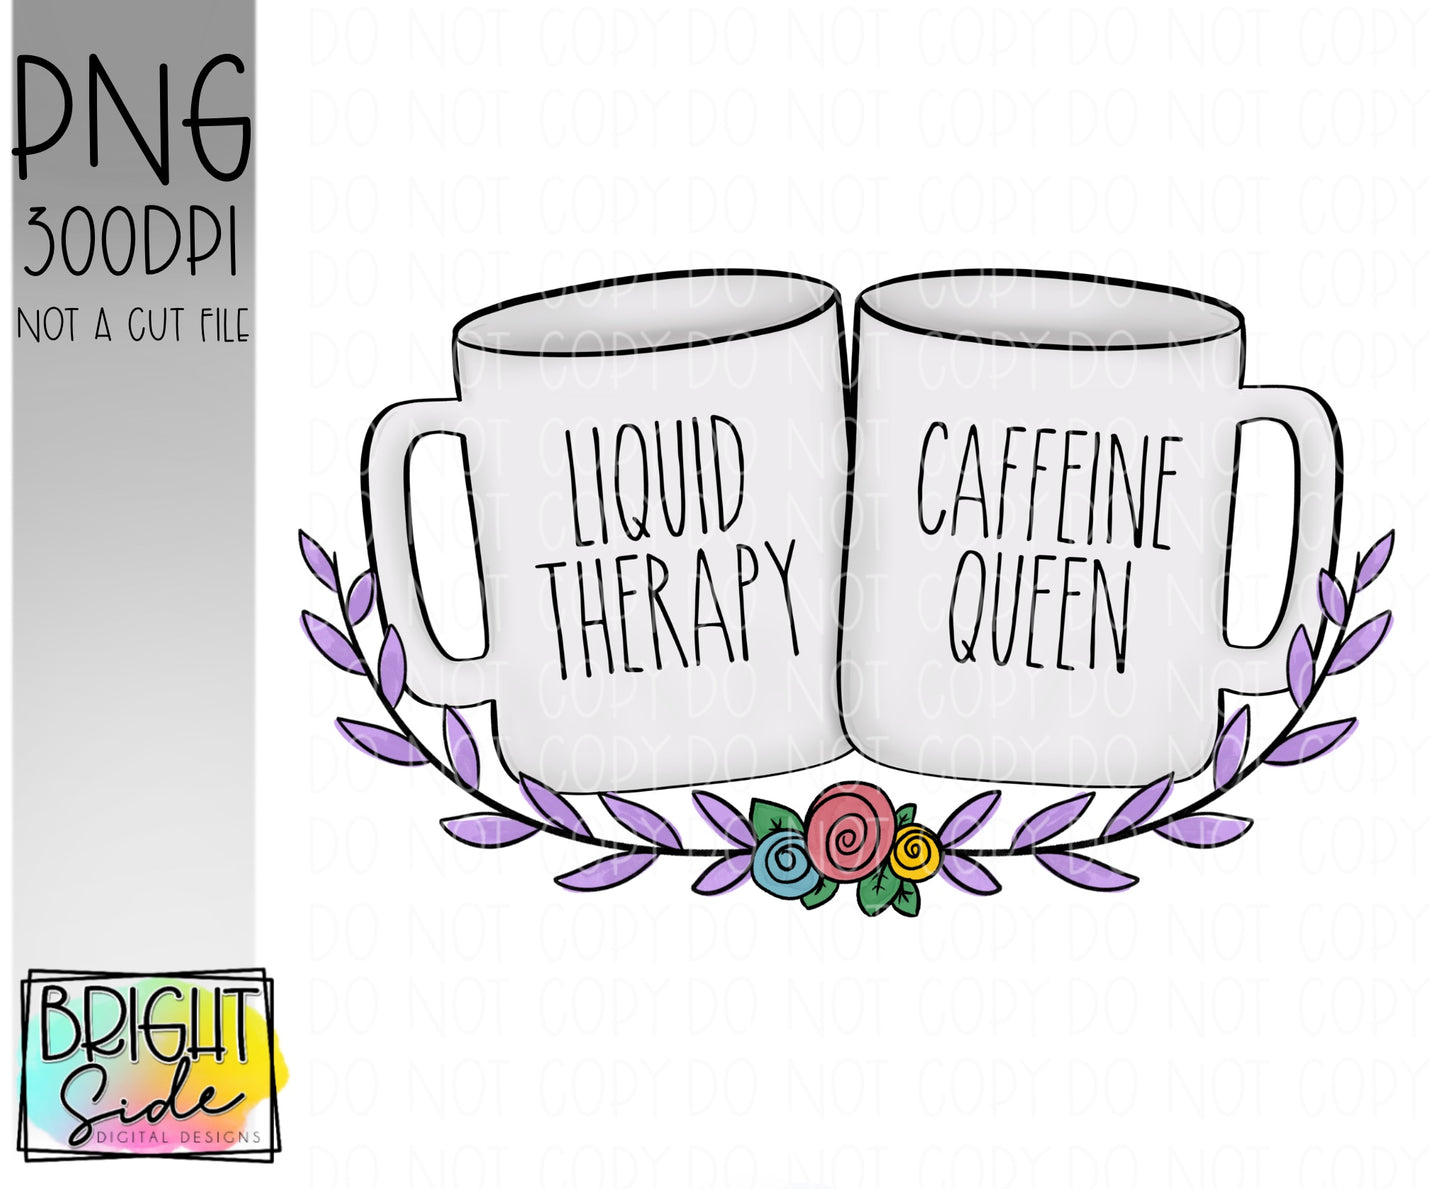 Liquid therapy & caffeine queen